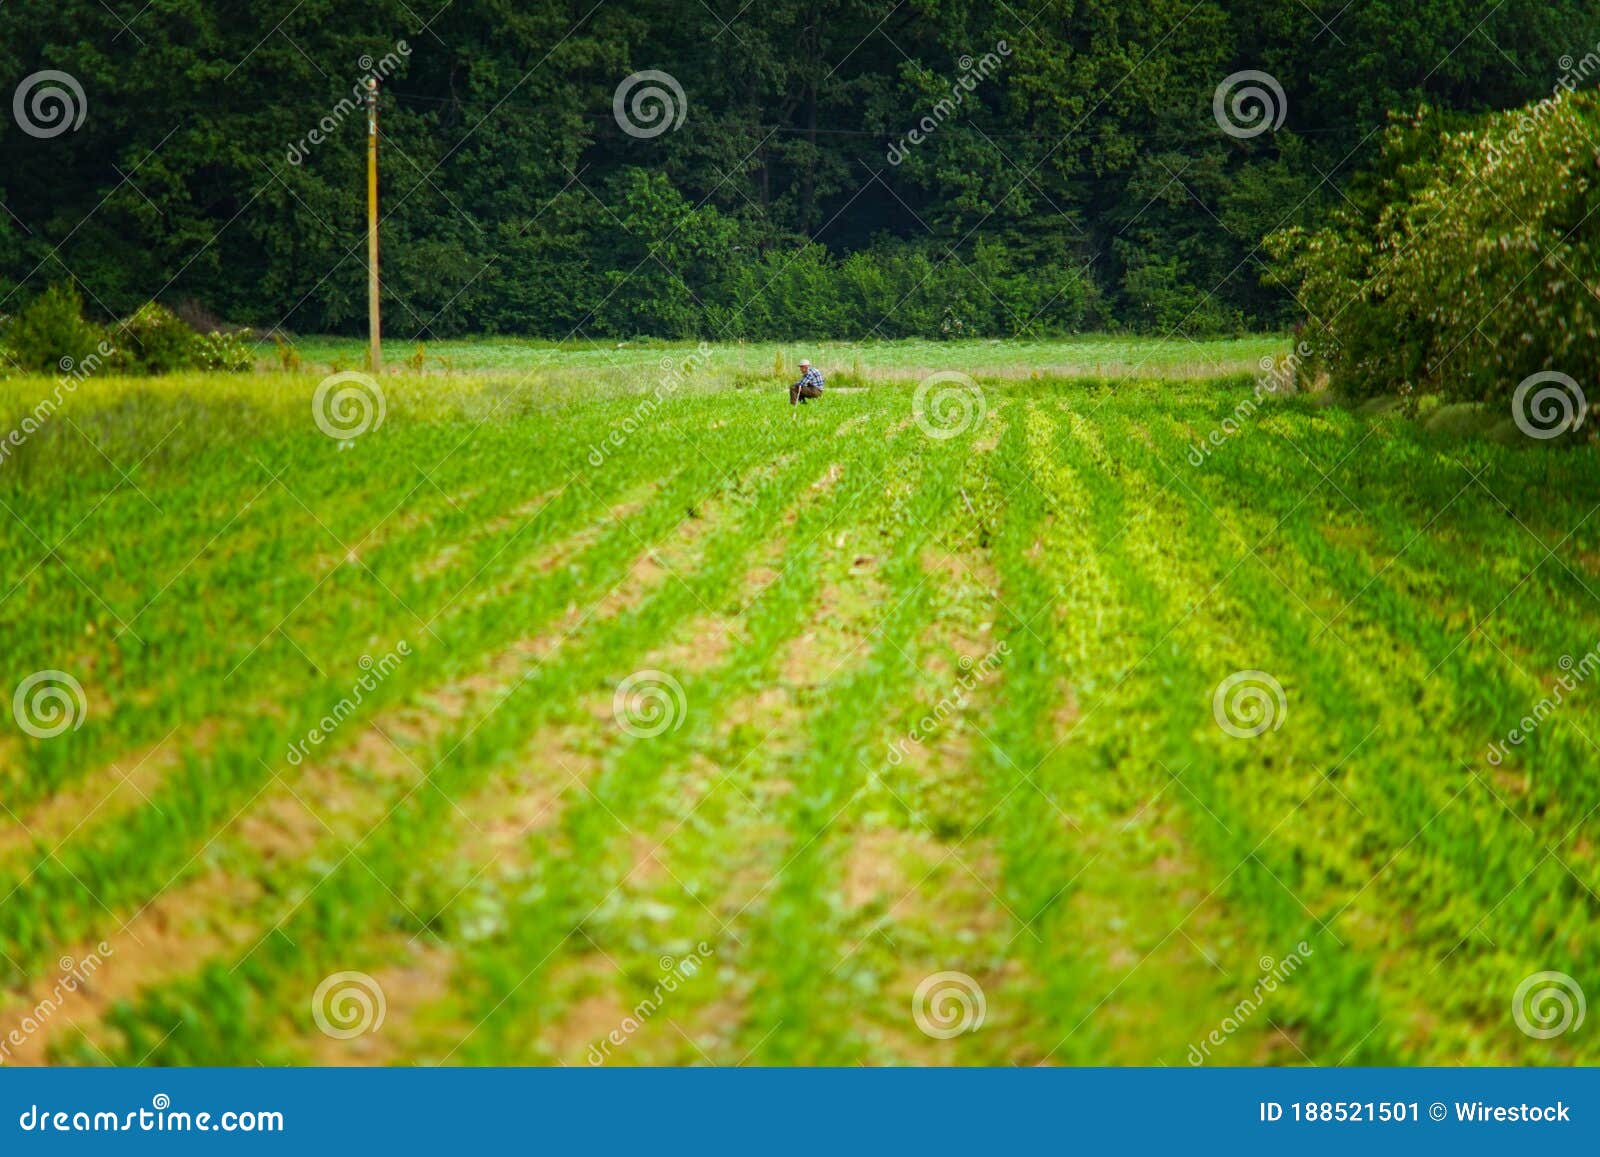 old man peasant, working cornfield near green forest,  rural village